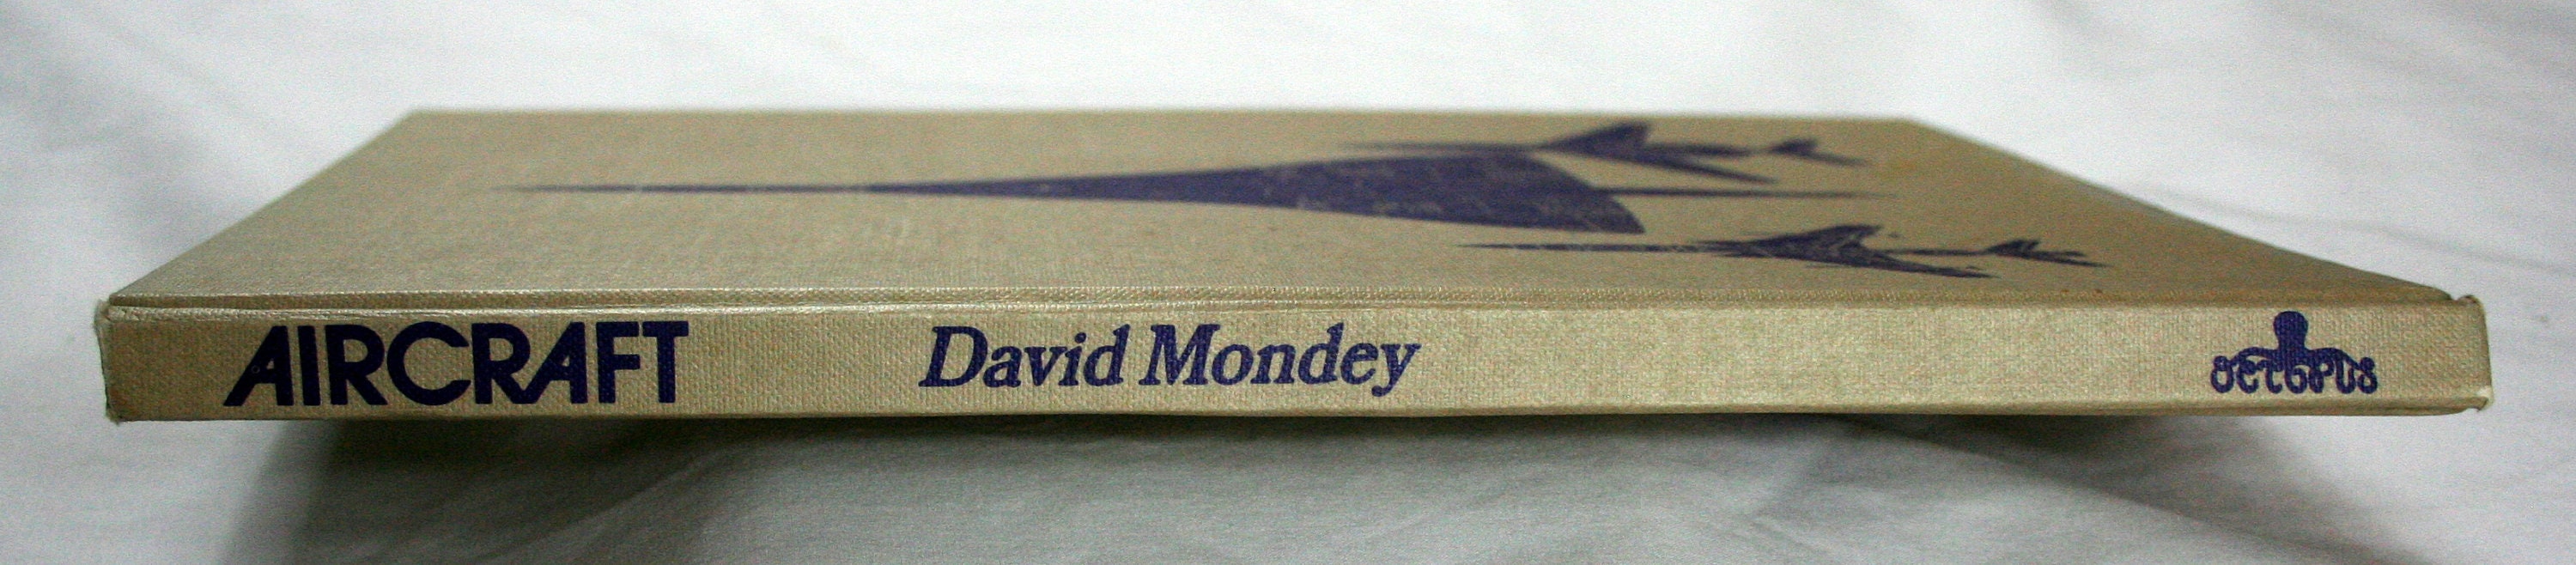 Aircraft by David Mondey Hardback Book 1973 | Etsy